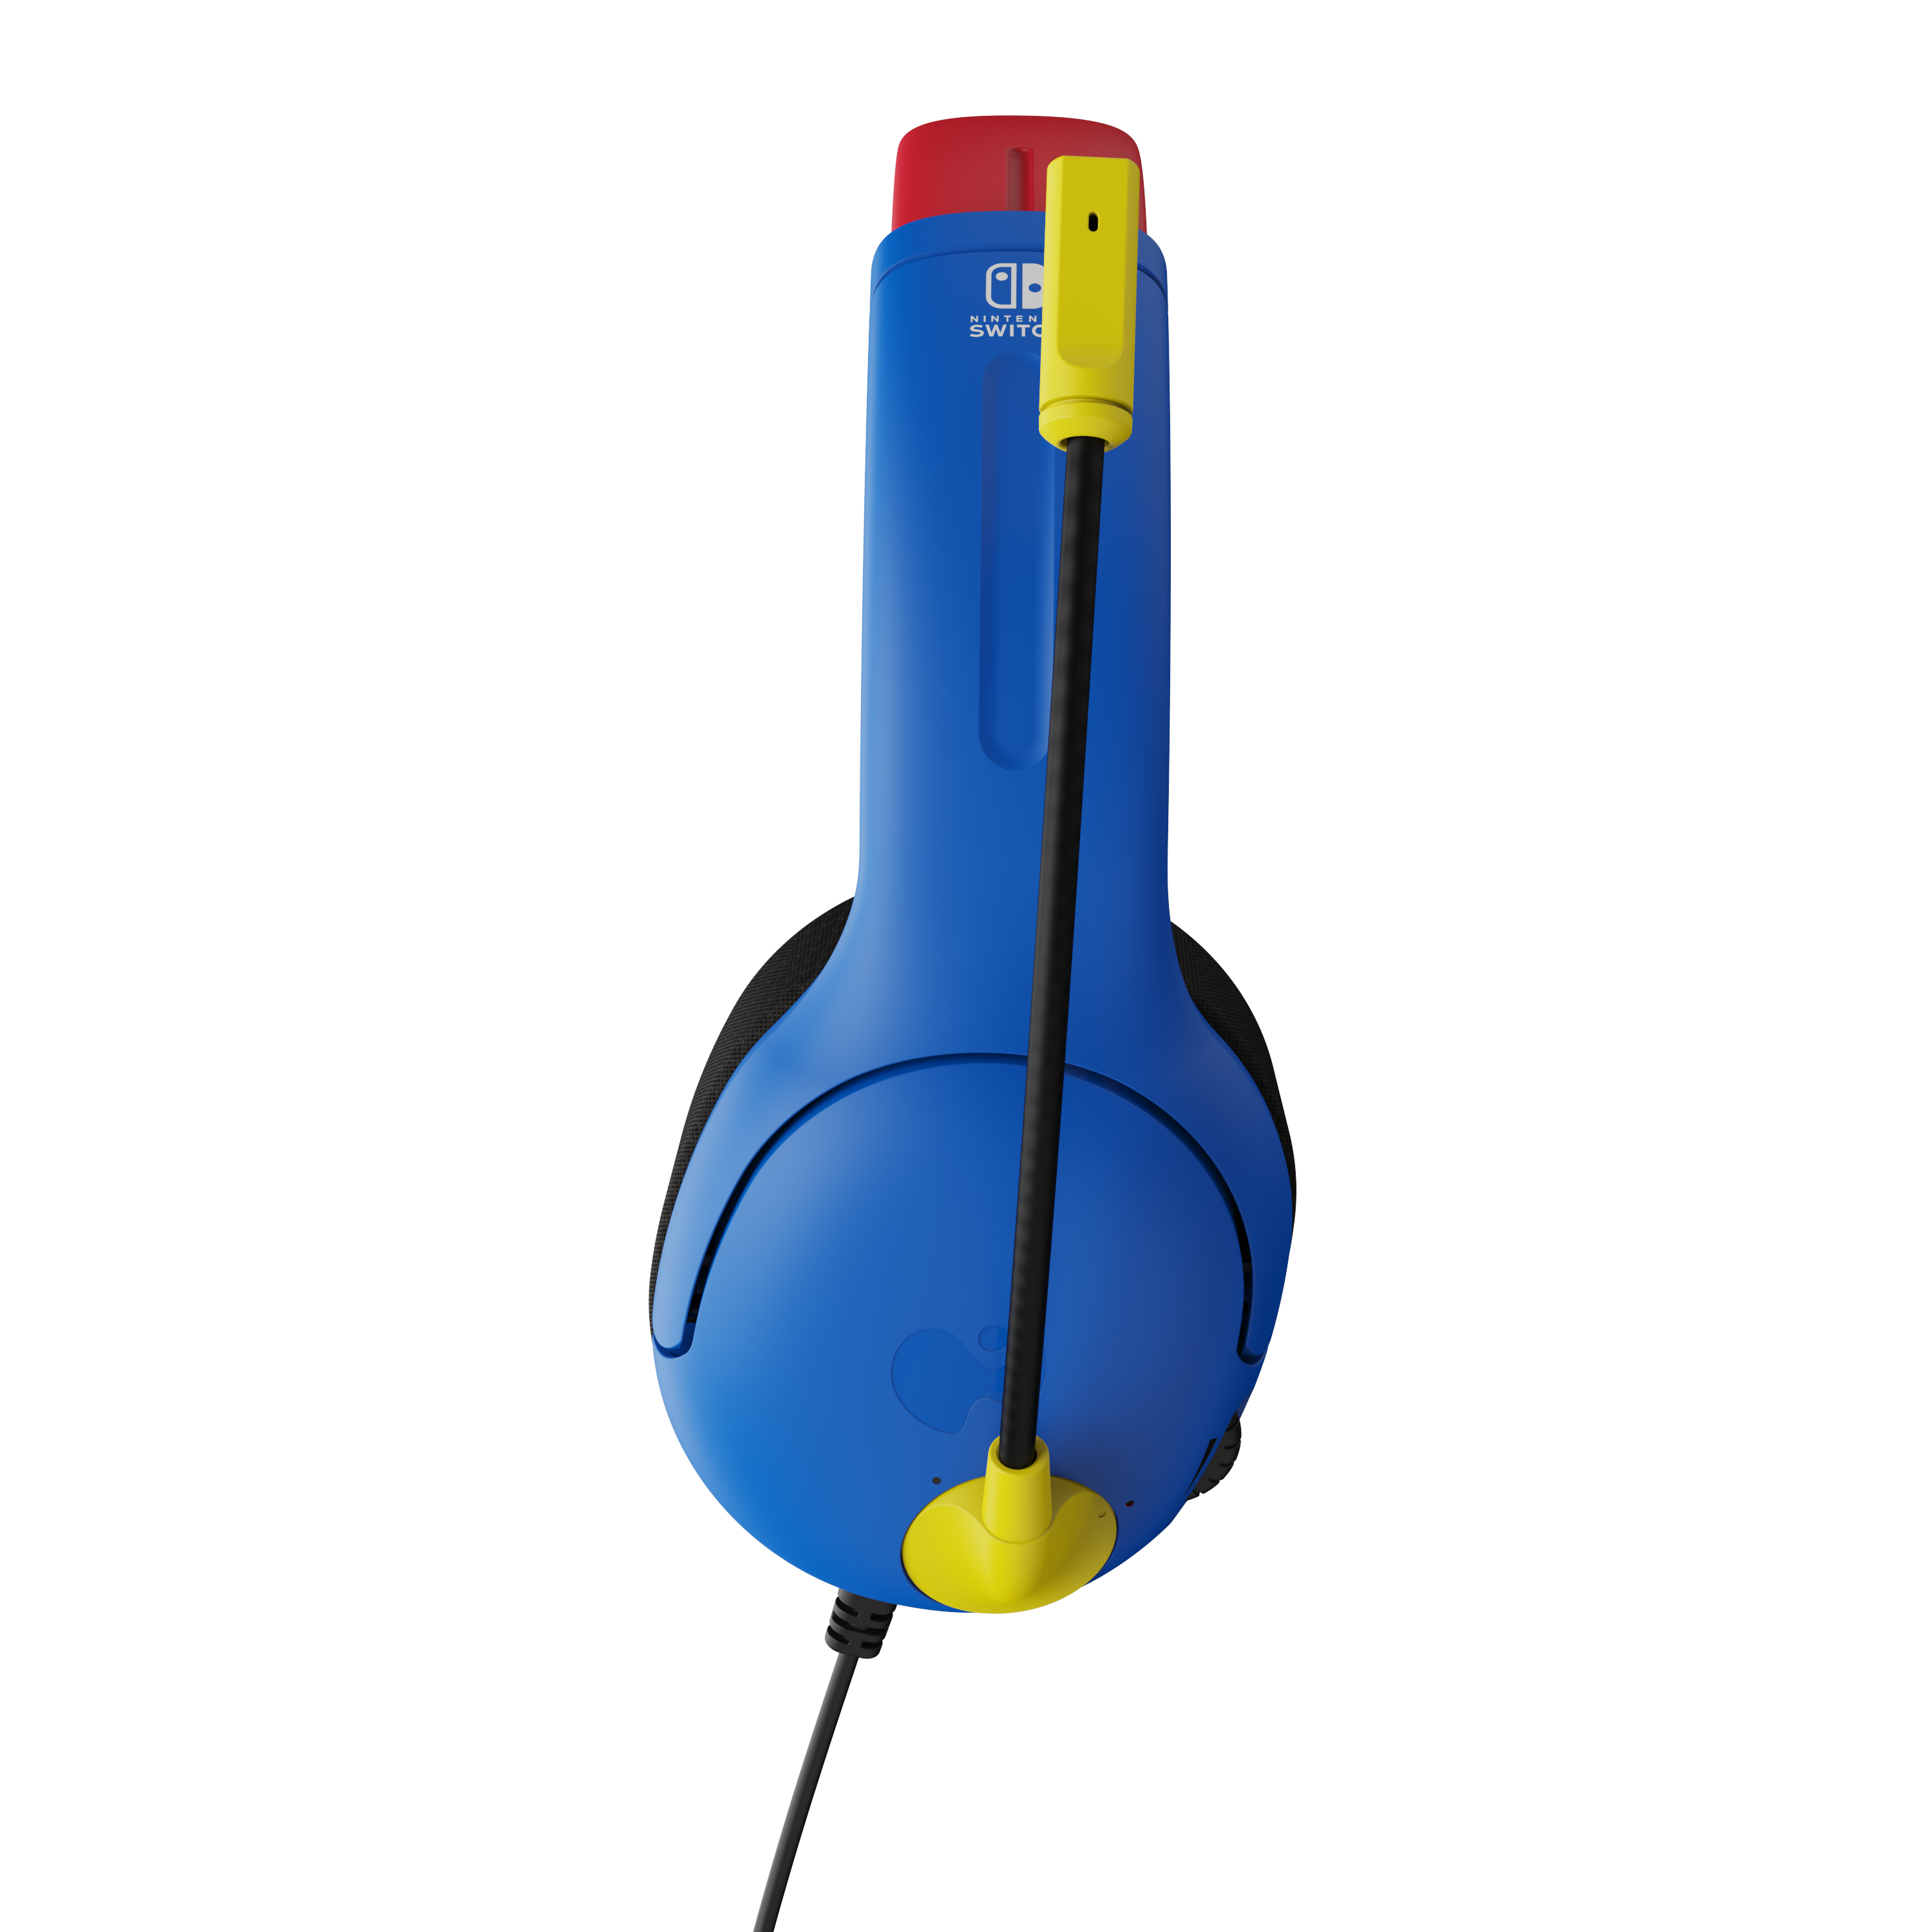 PDP LLC AIRLITE Kabelgebundenes Headset On-ear Headset: Gaming Mario Dash, Mehrfarbig